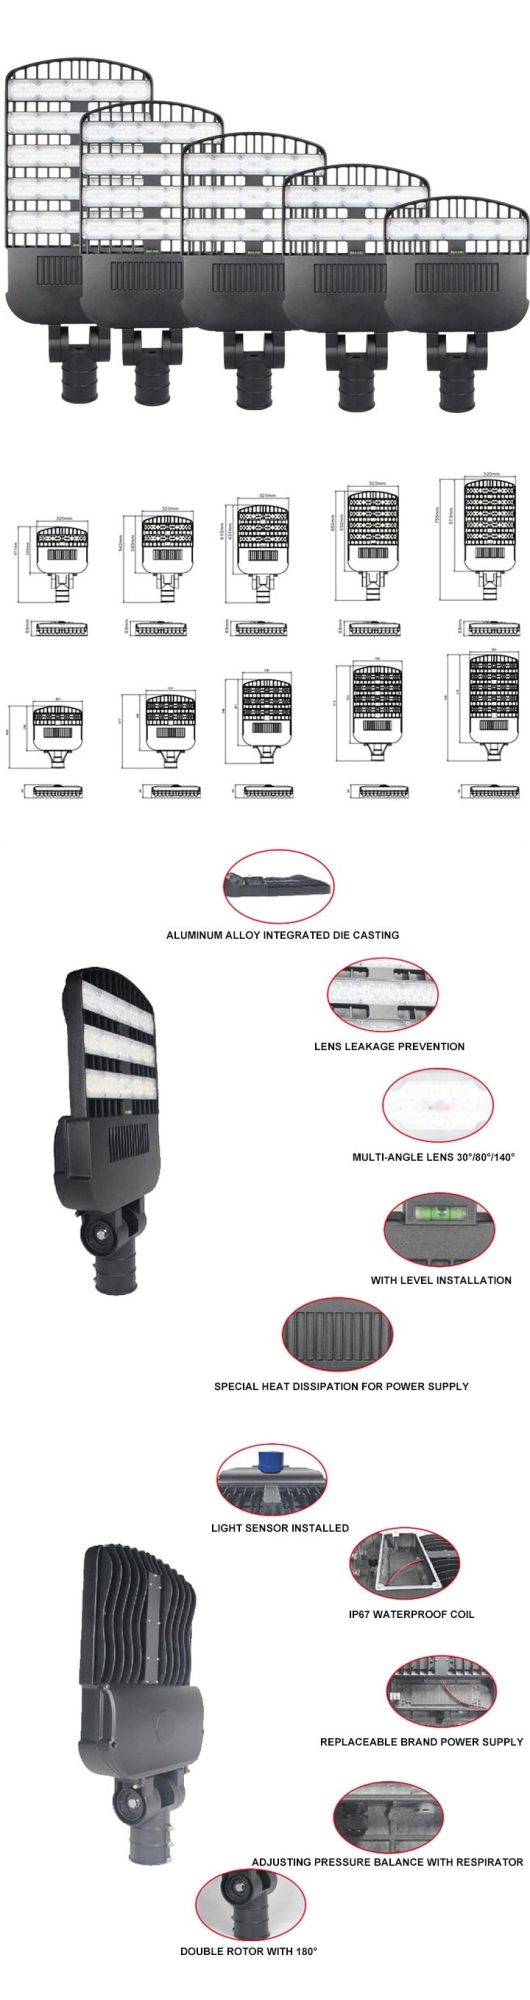 Hpzm LED Light Waterproof IP67 150W LED Street Light